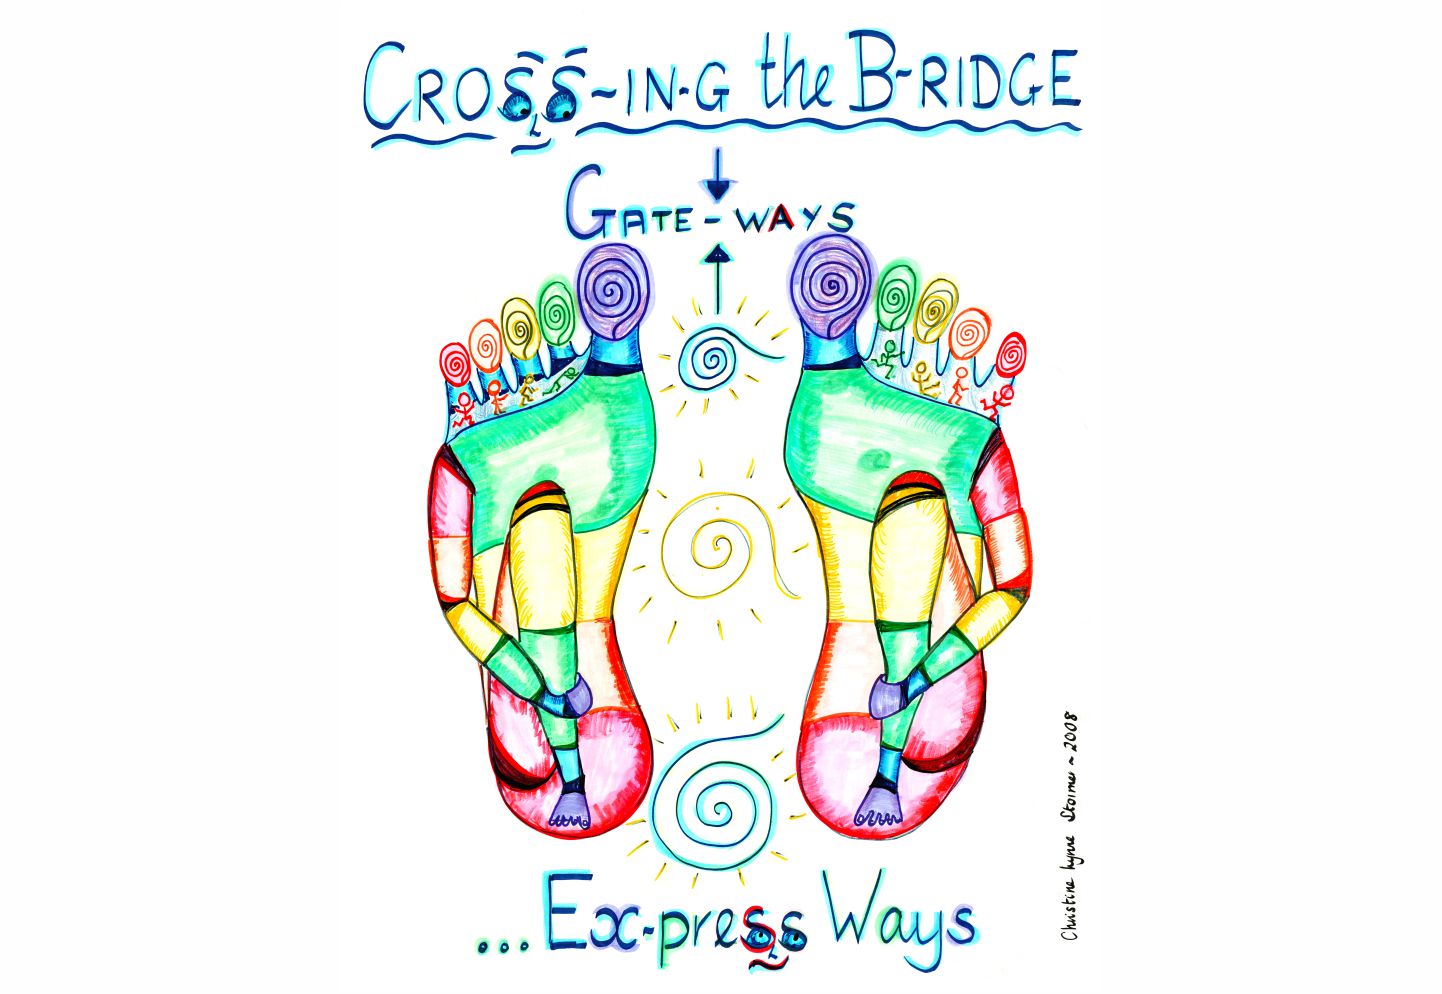 3 Crossing the Bridge